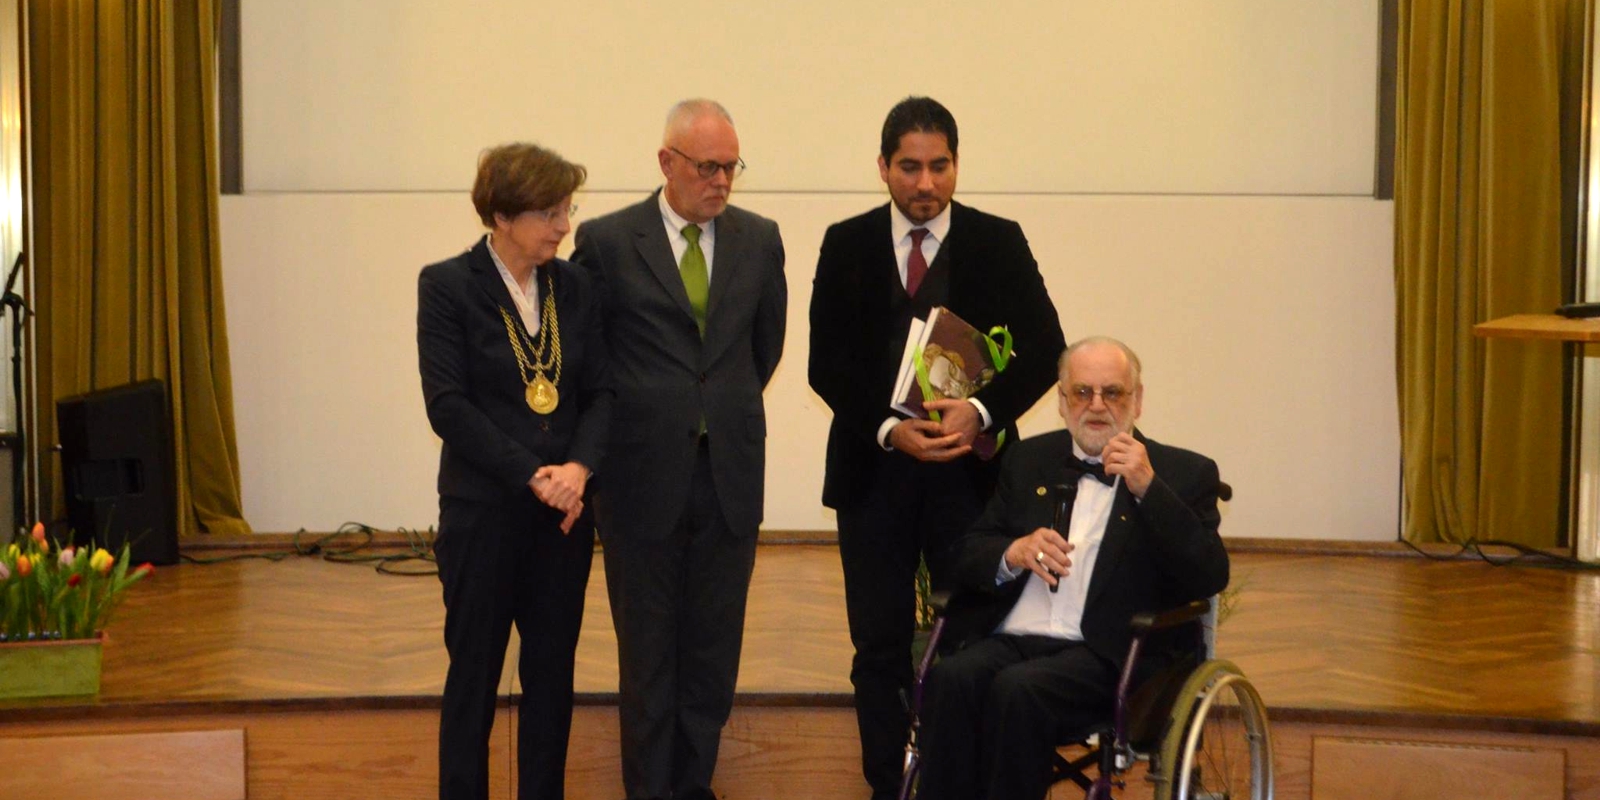 Prof. Dr. Ursula Nelles, Michael Oberkötter und Prof. Dr. Mouhanad Khorchide links stehend neben Muhammad Salim Abdullah im Rollstuhl